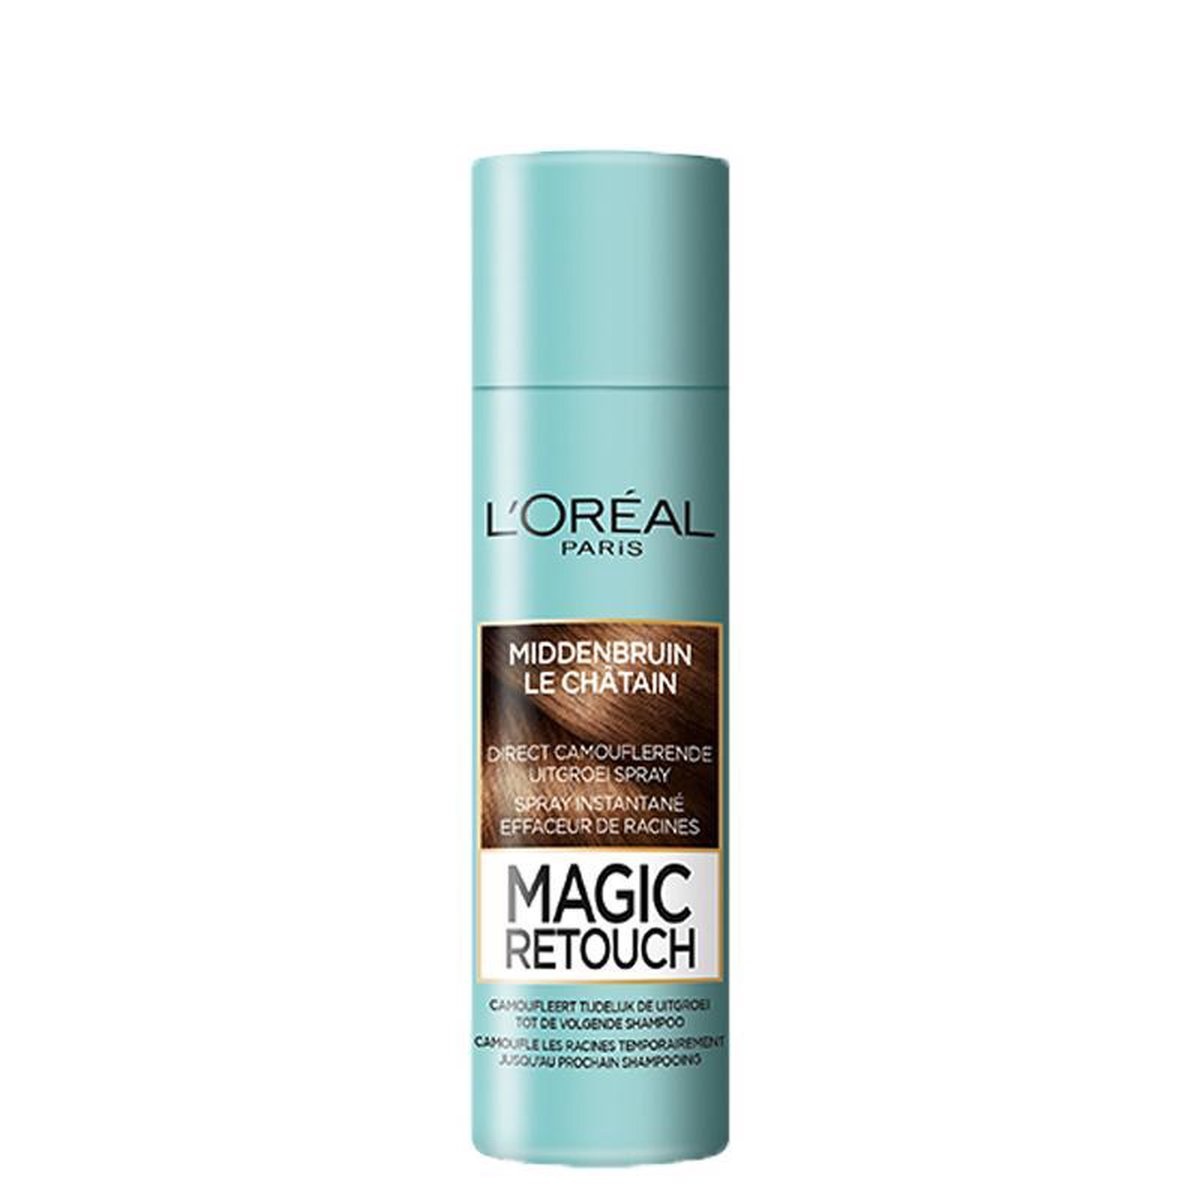 L'Oréal Paris Magic Retouch – Outgrowth Camouflage Spray, 150 ml Vorteilspackung – 3 Mittelbraun